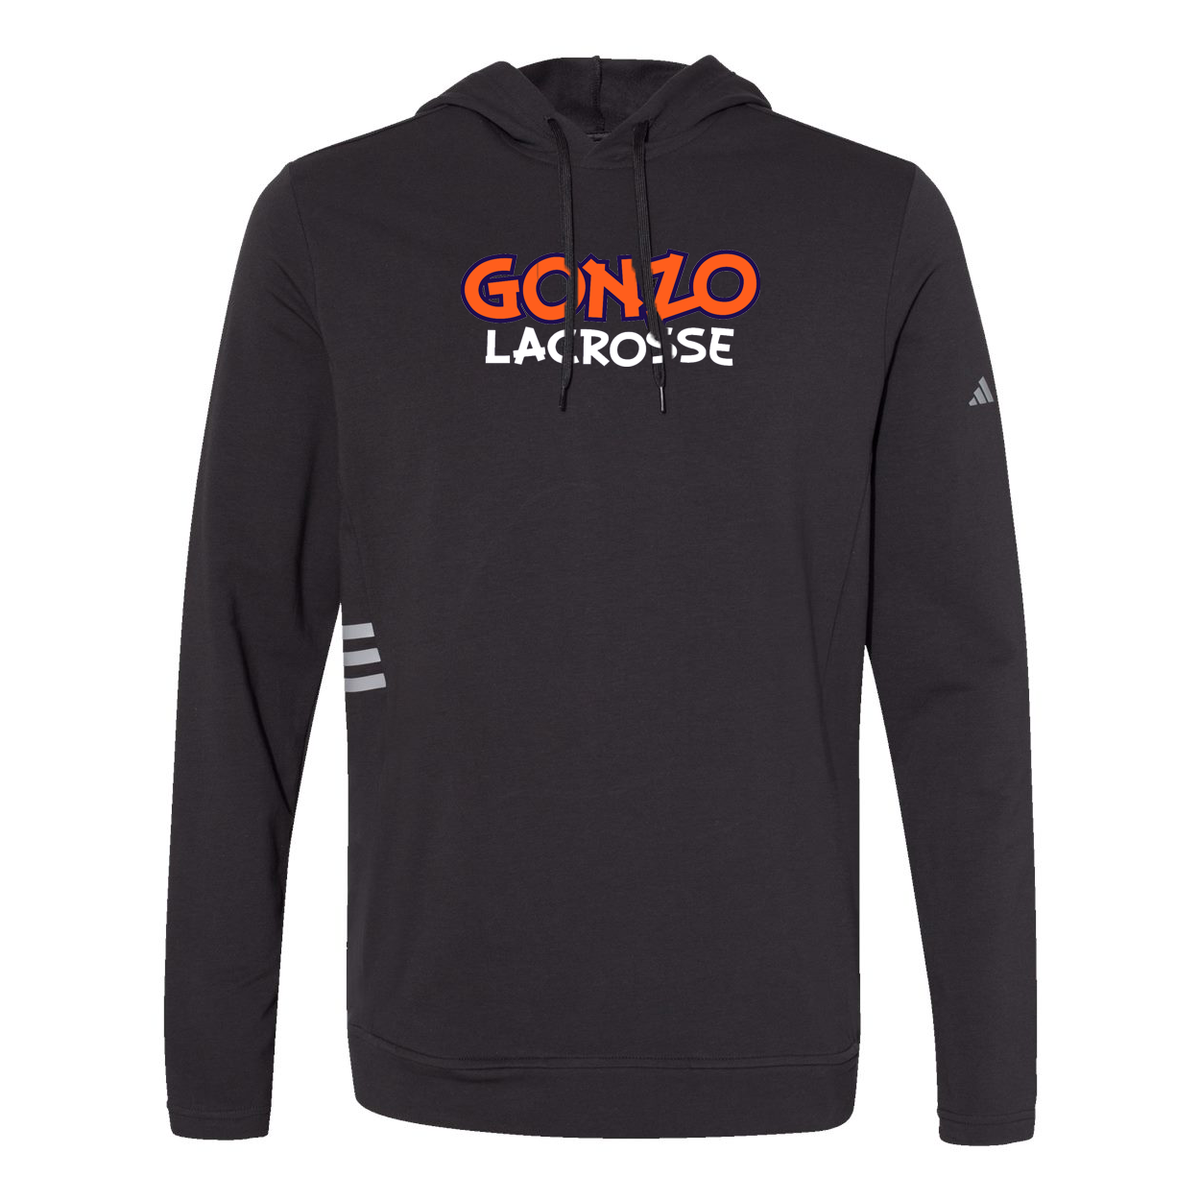 Gonzo Lacrosse Adidas Lightweight Sweatshirt